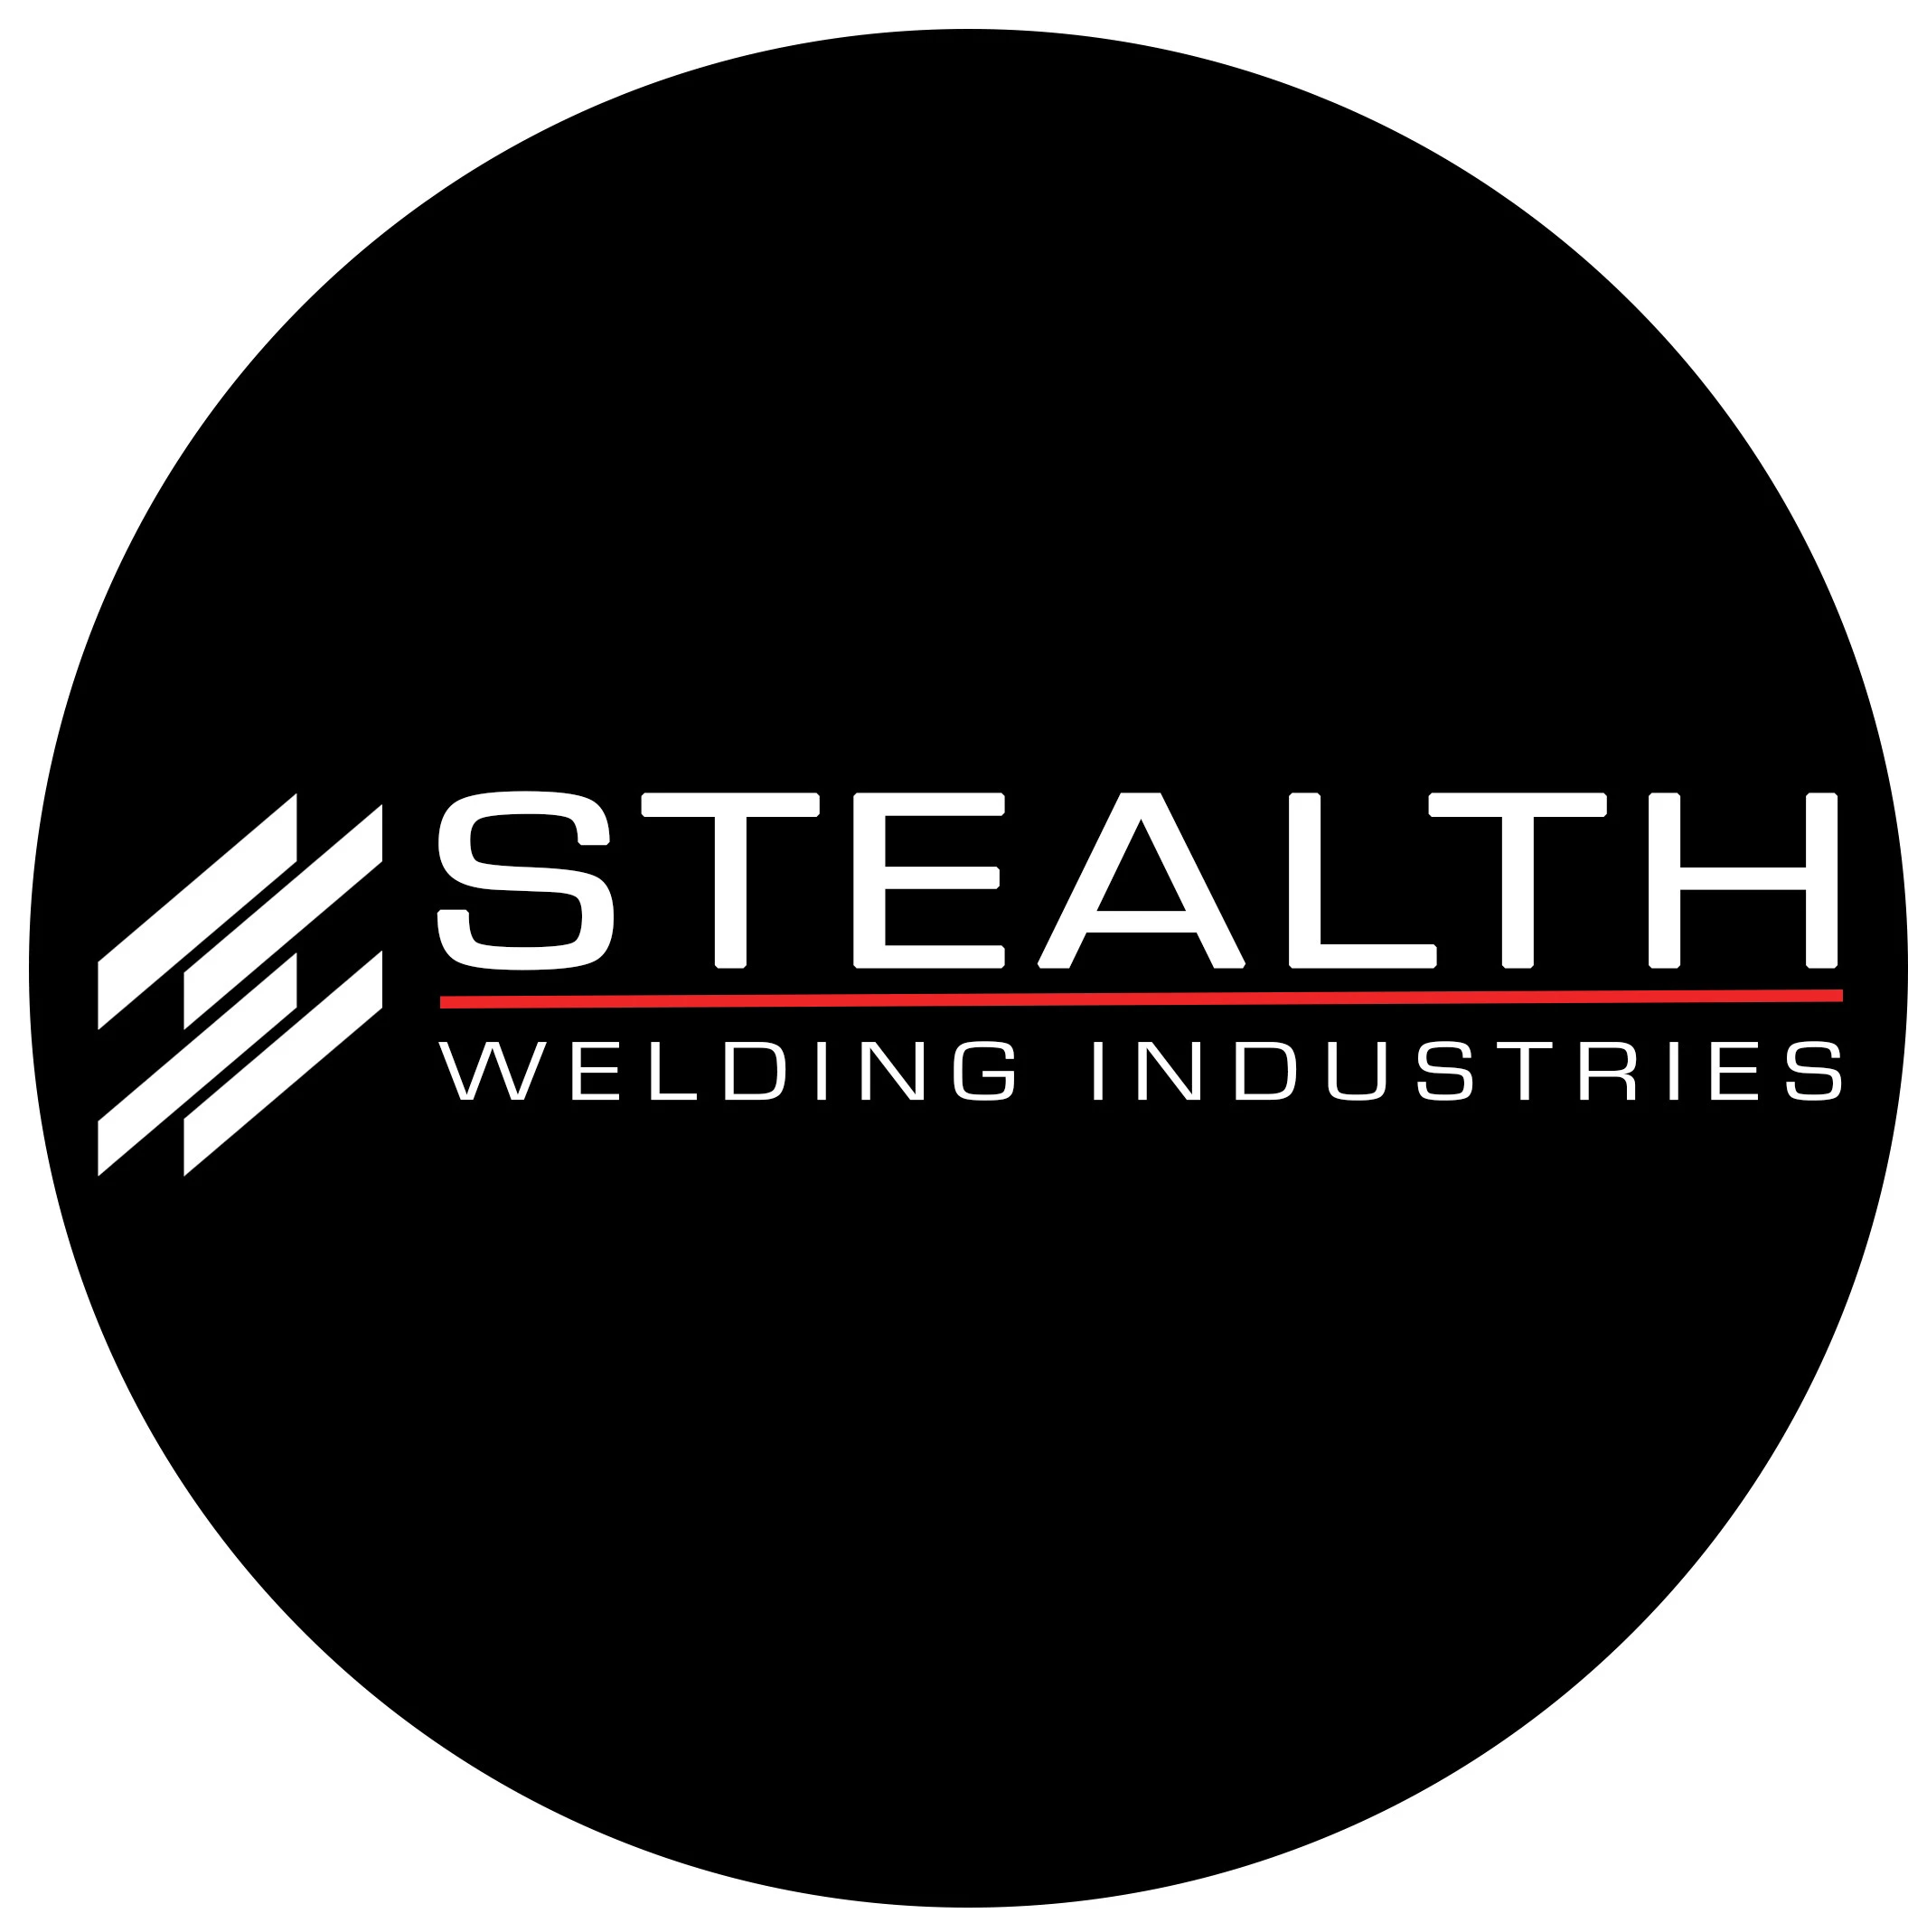 Stealth Welding Industries